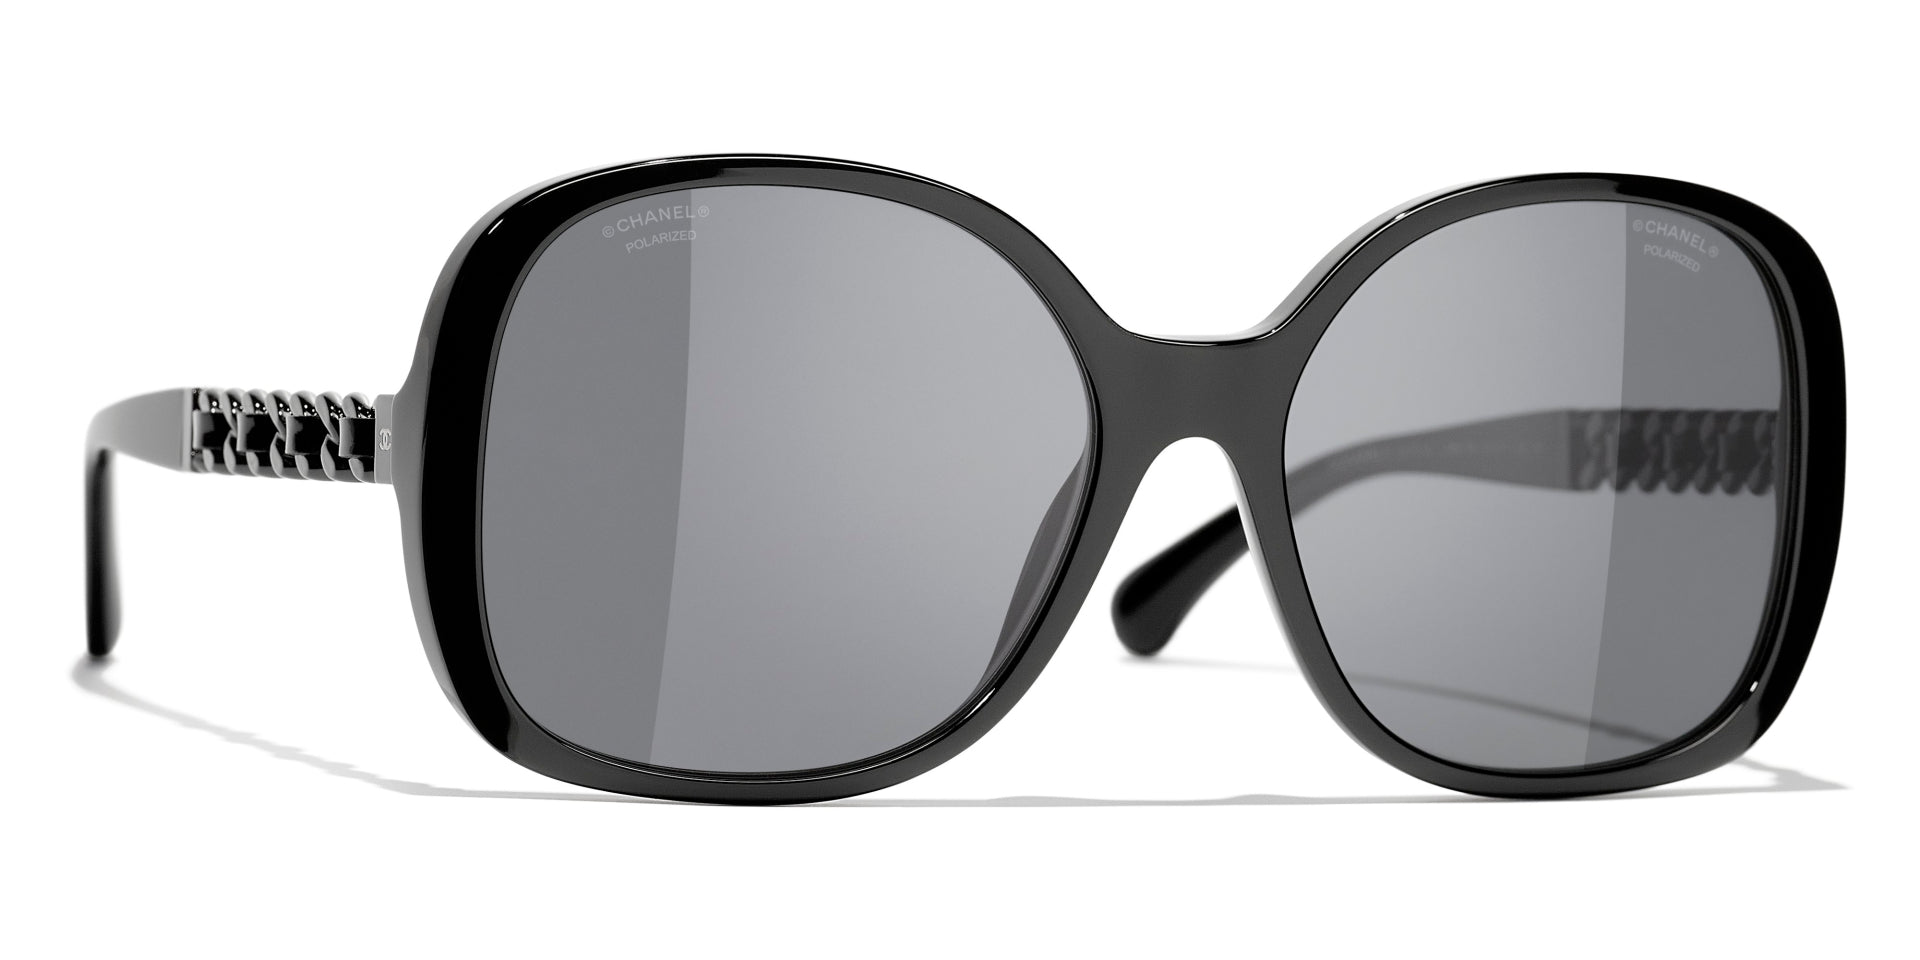 Chanel Square Frame Chain Sunglasses